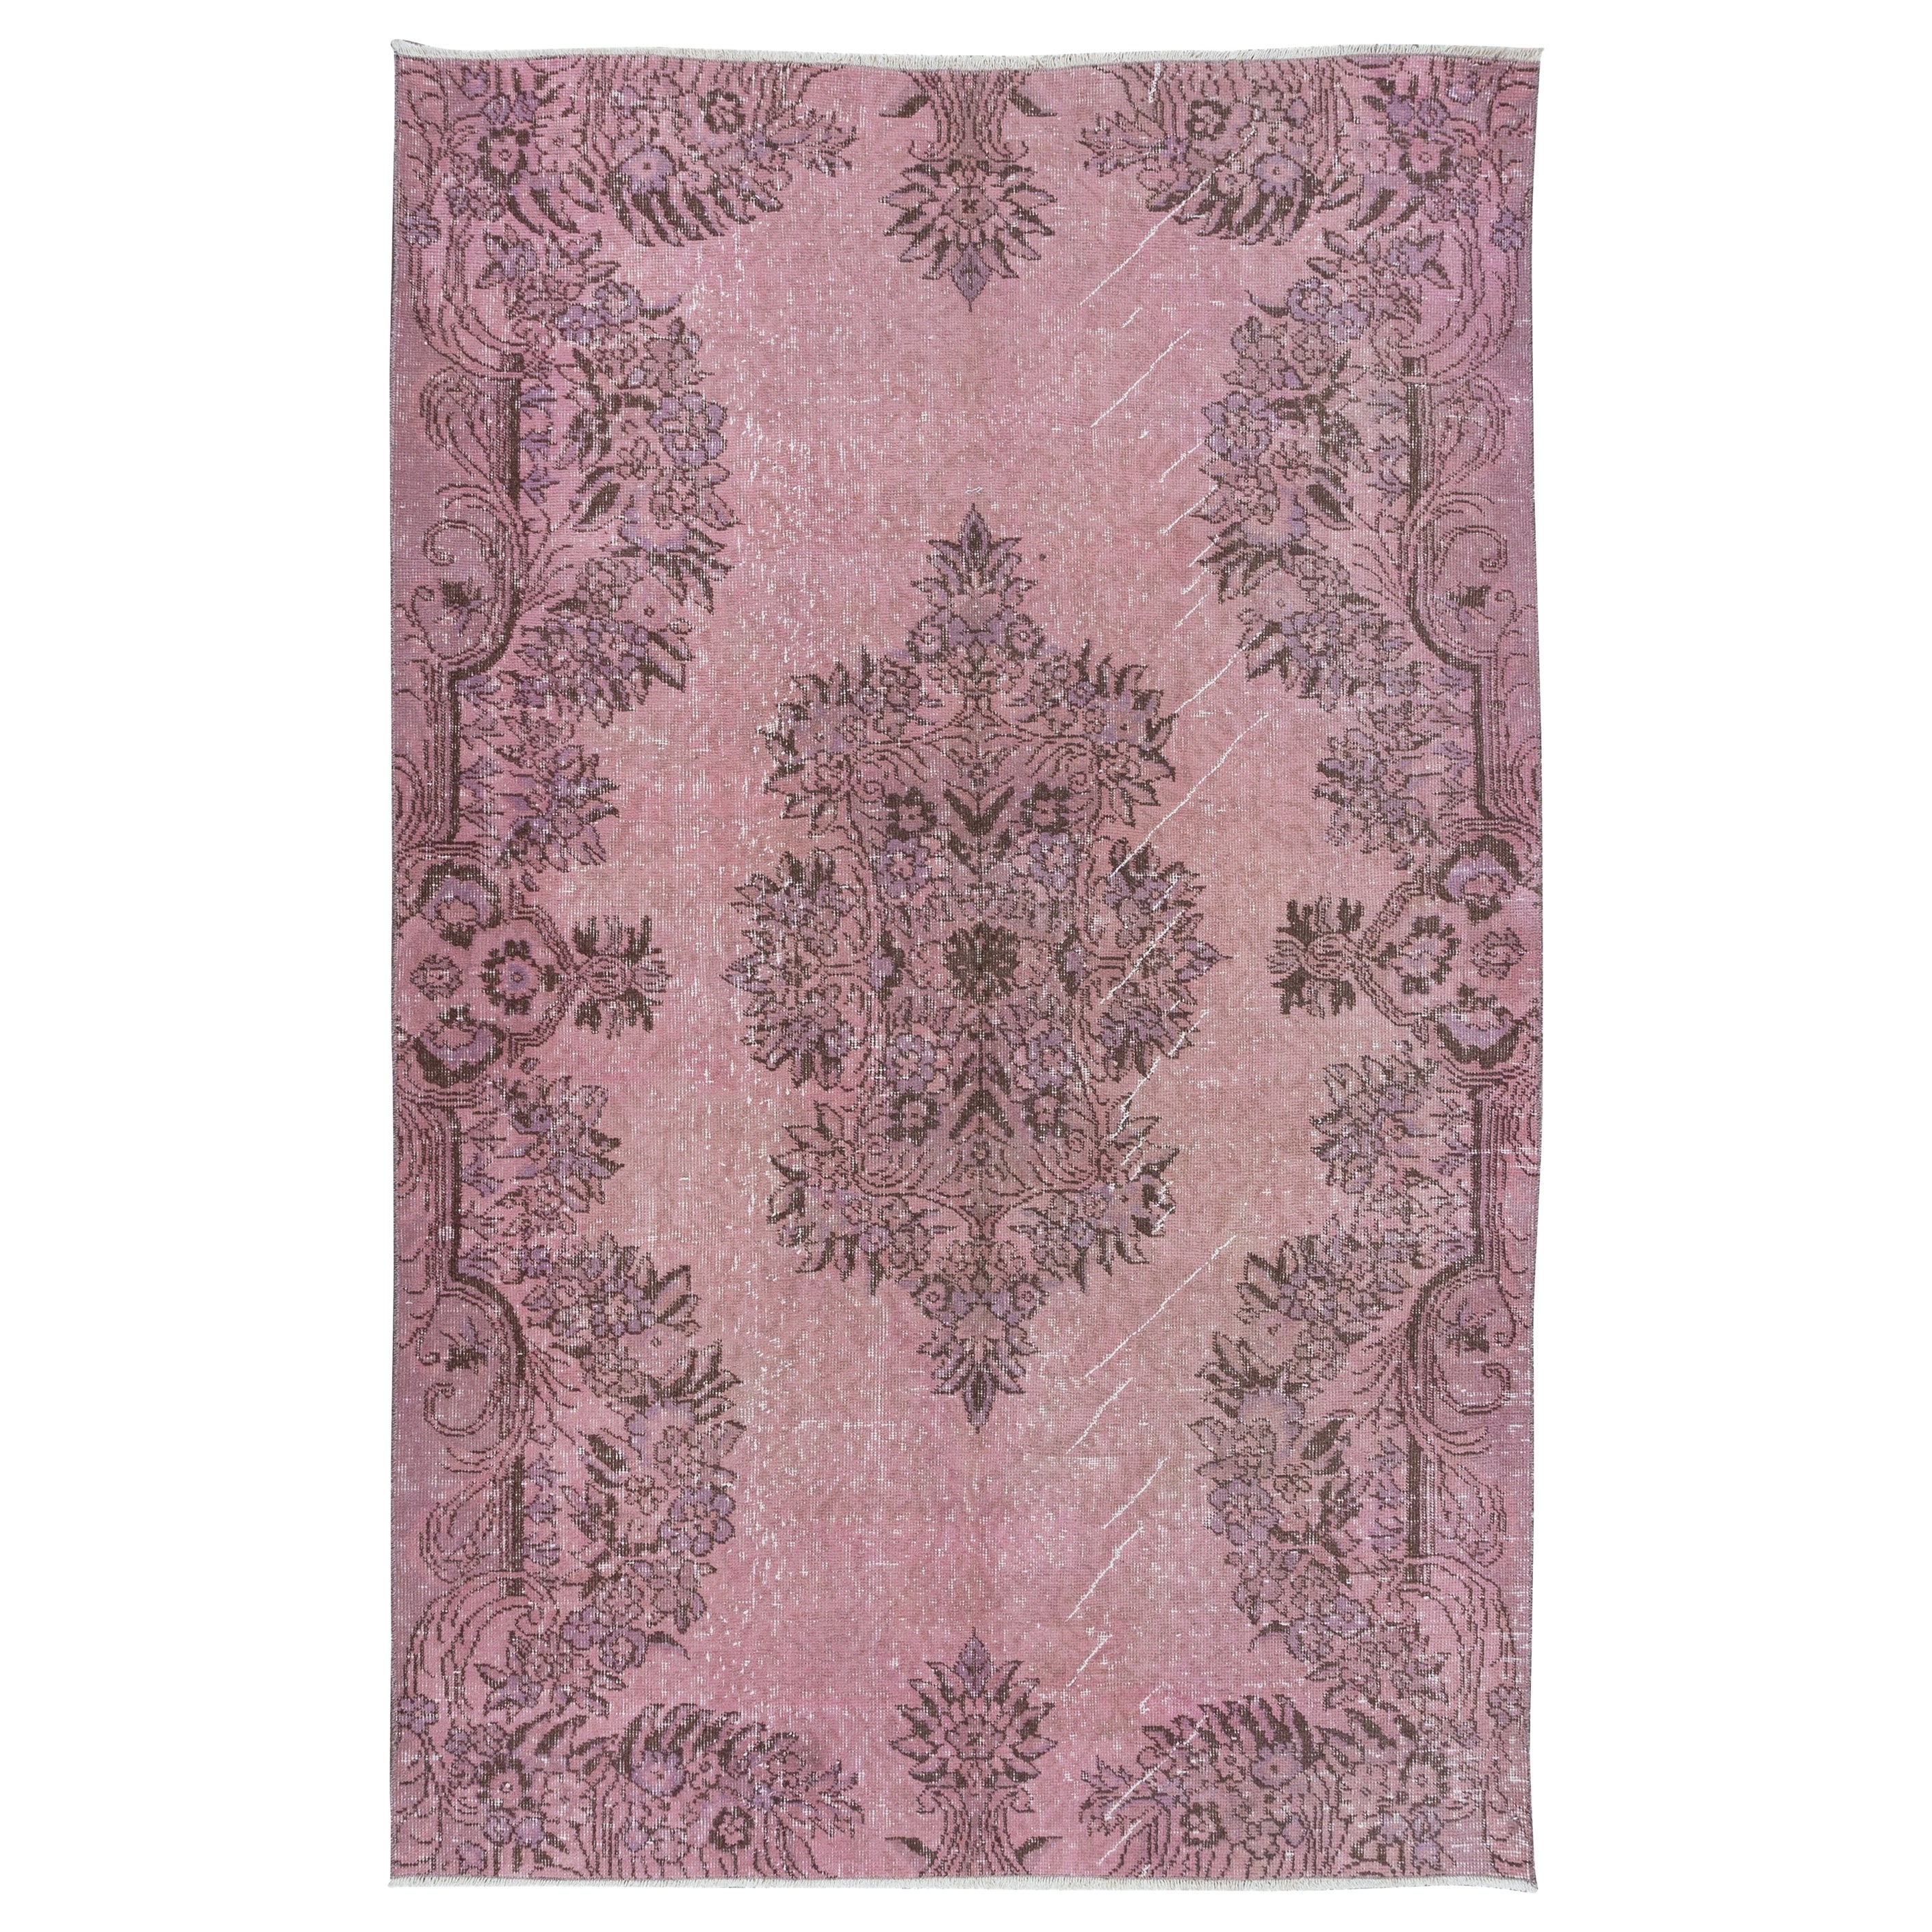 5x7.7 Ft Soft Pink Handmade Area Rug, Room Size Modern Turkish Wool Carpet For Sale